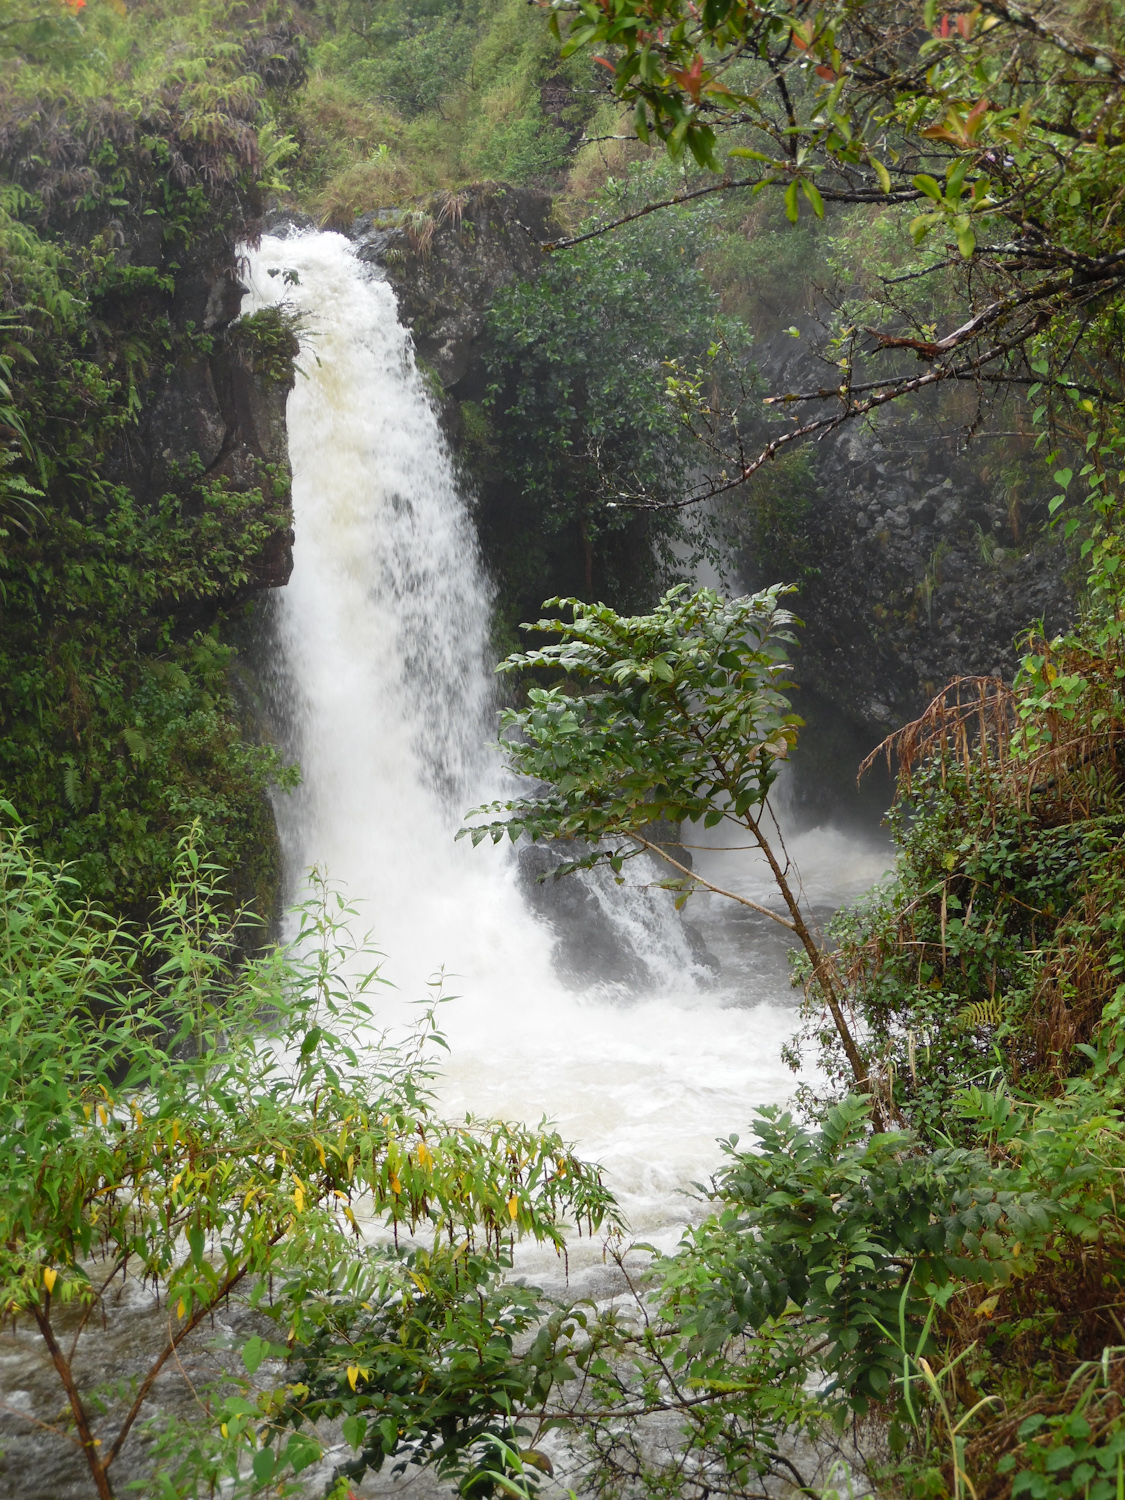 Hana road water falls